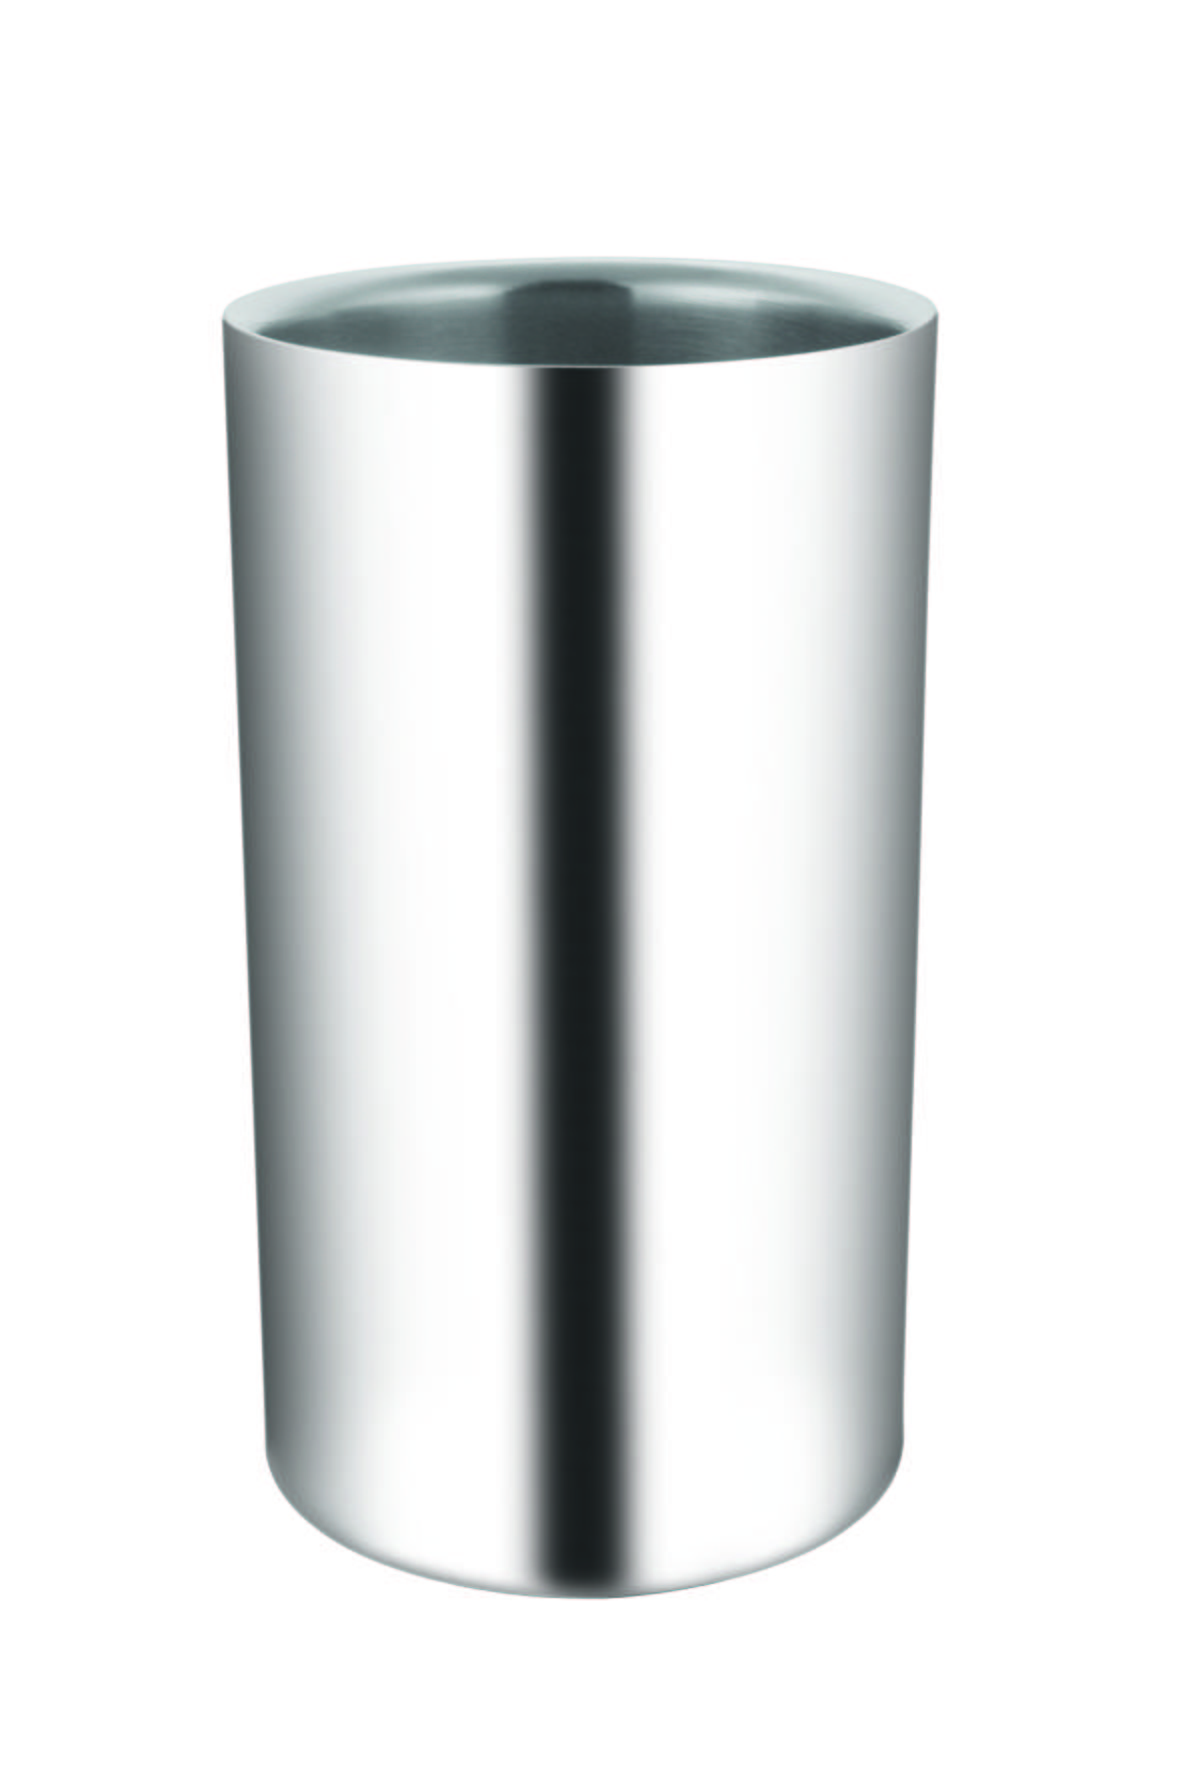 Flaschenkühler Timo aus Edelstahl ca. 1,5l - Edelstahlfarben, KONVENTIONELL, Metall (12/20cm) - Modern Living